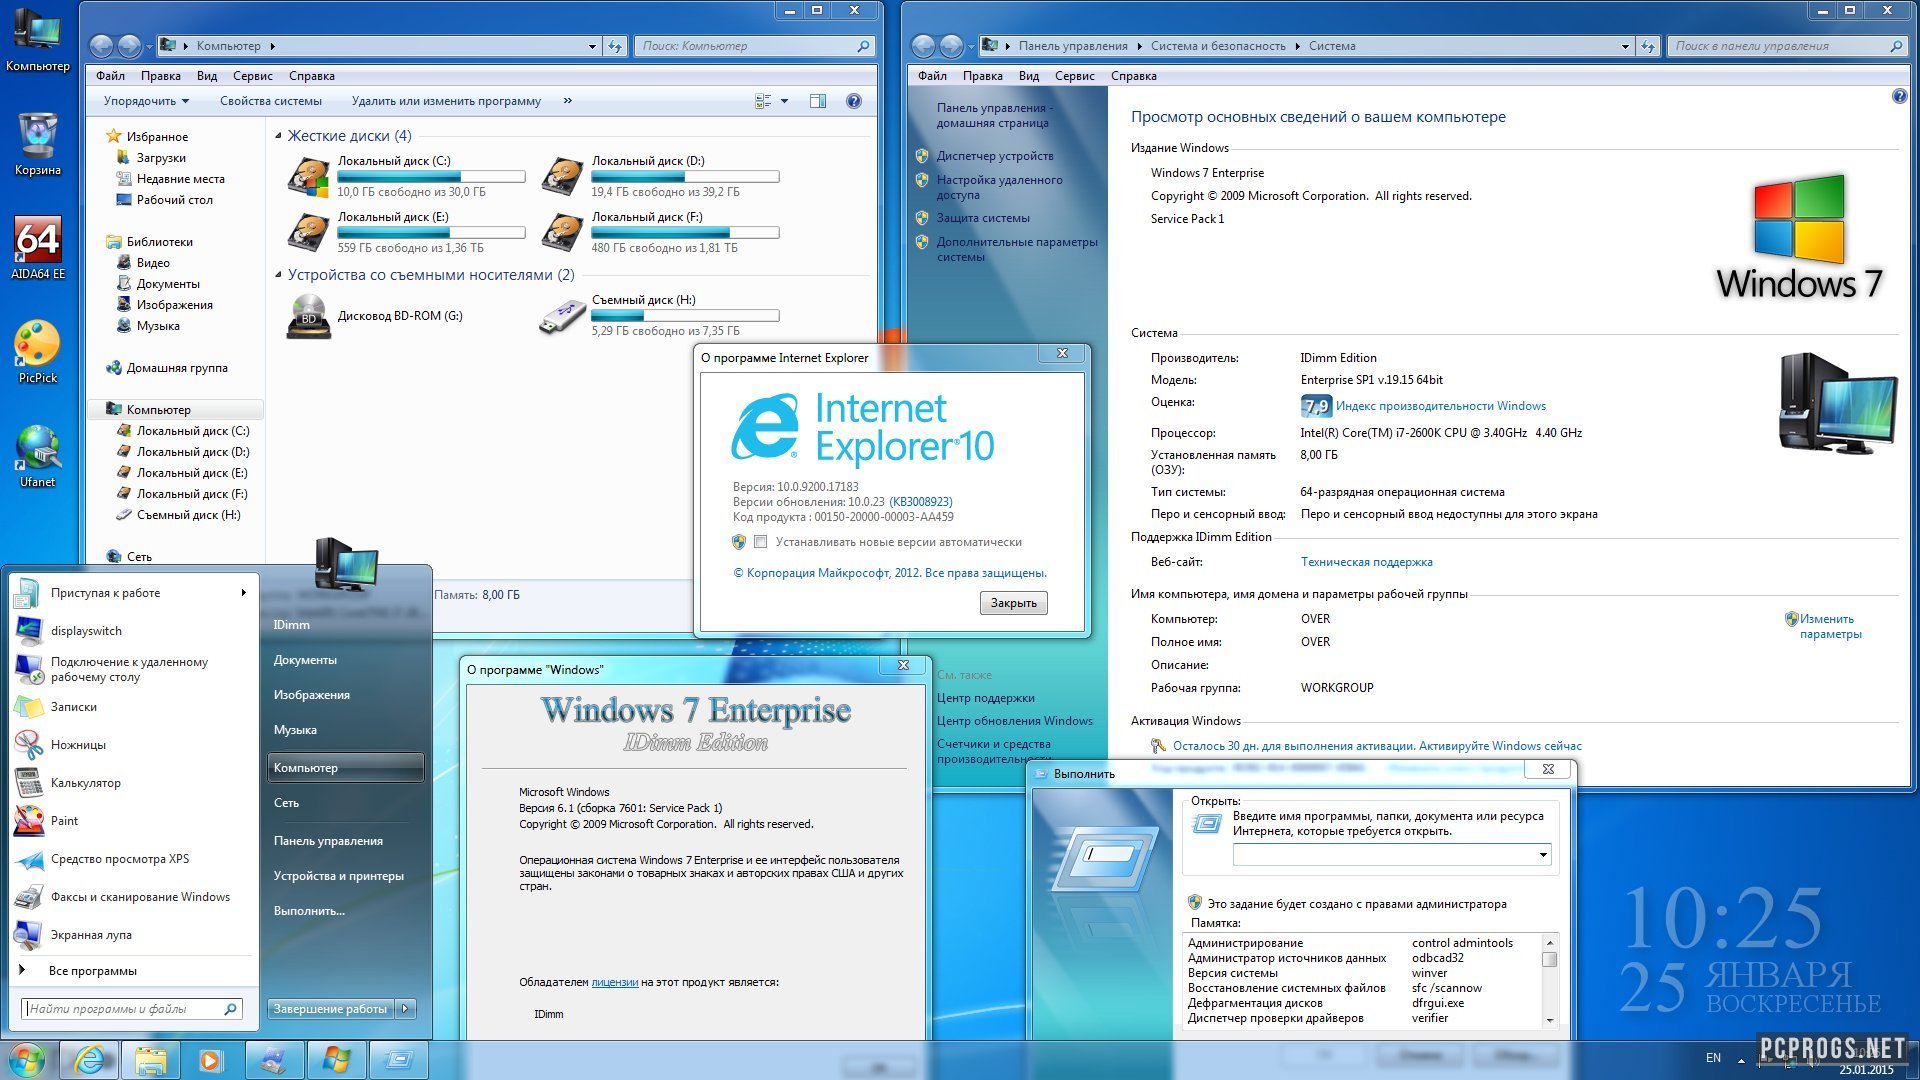 Windows 7 Enterprise IDIMM Edition 19.15